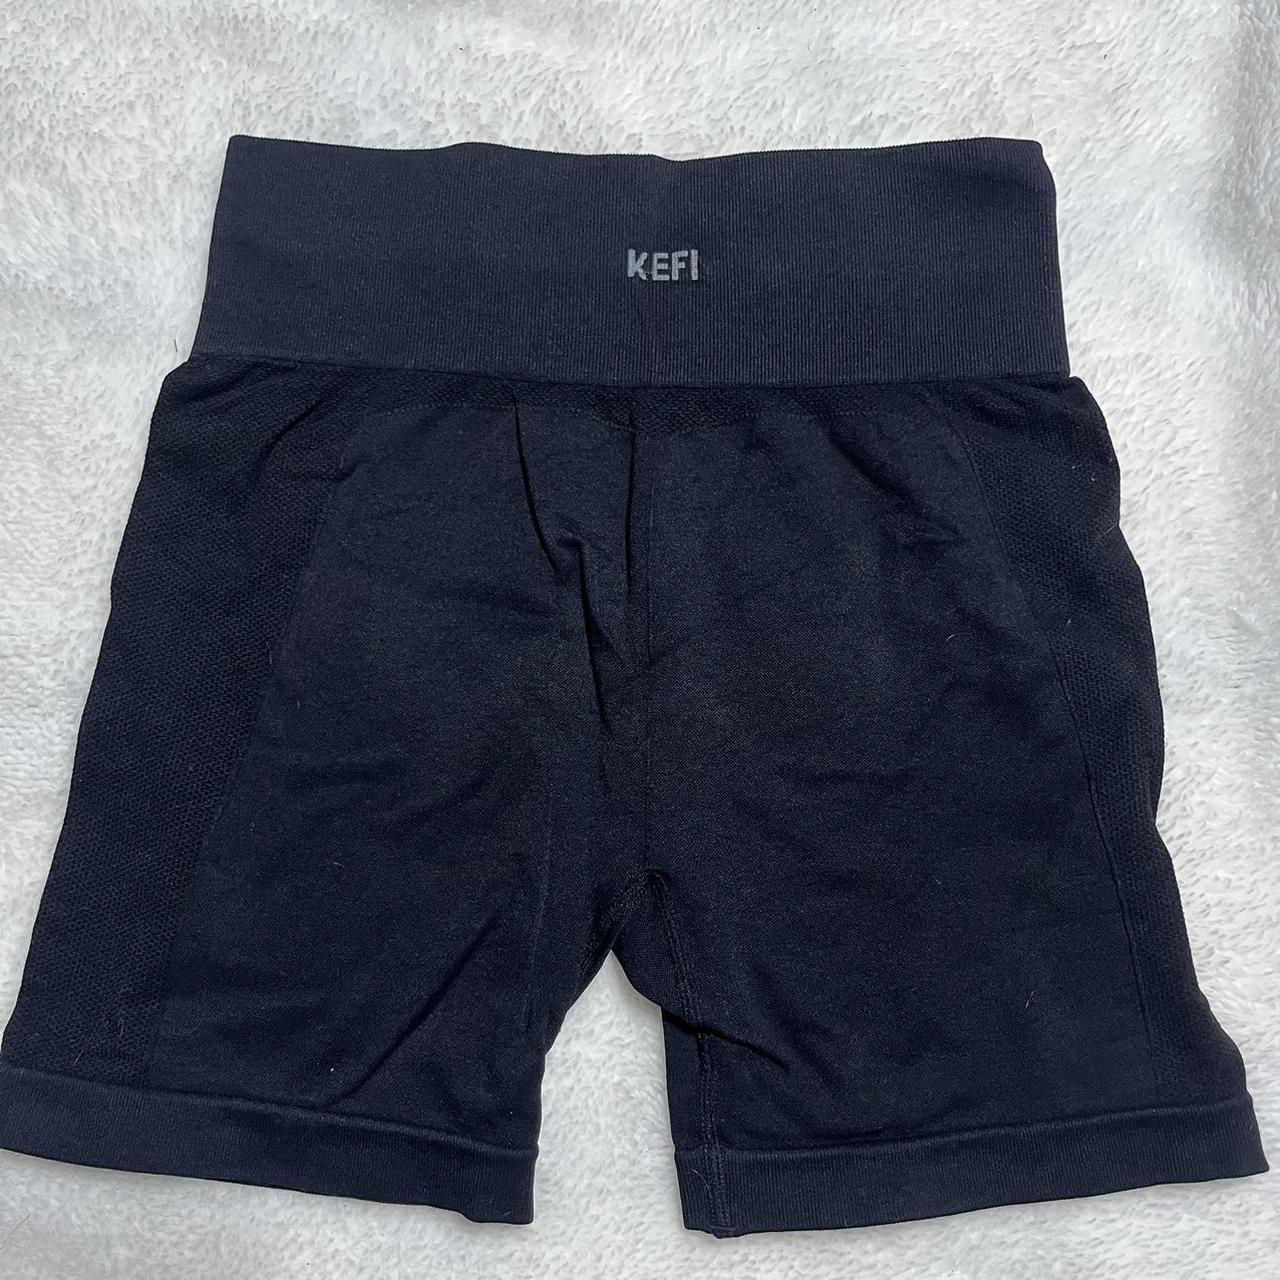 Kefi black seamless shorts Worn once MSG ME TO... - Depop